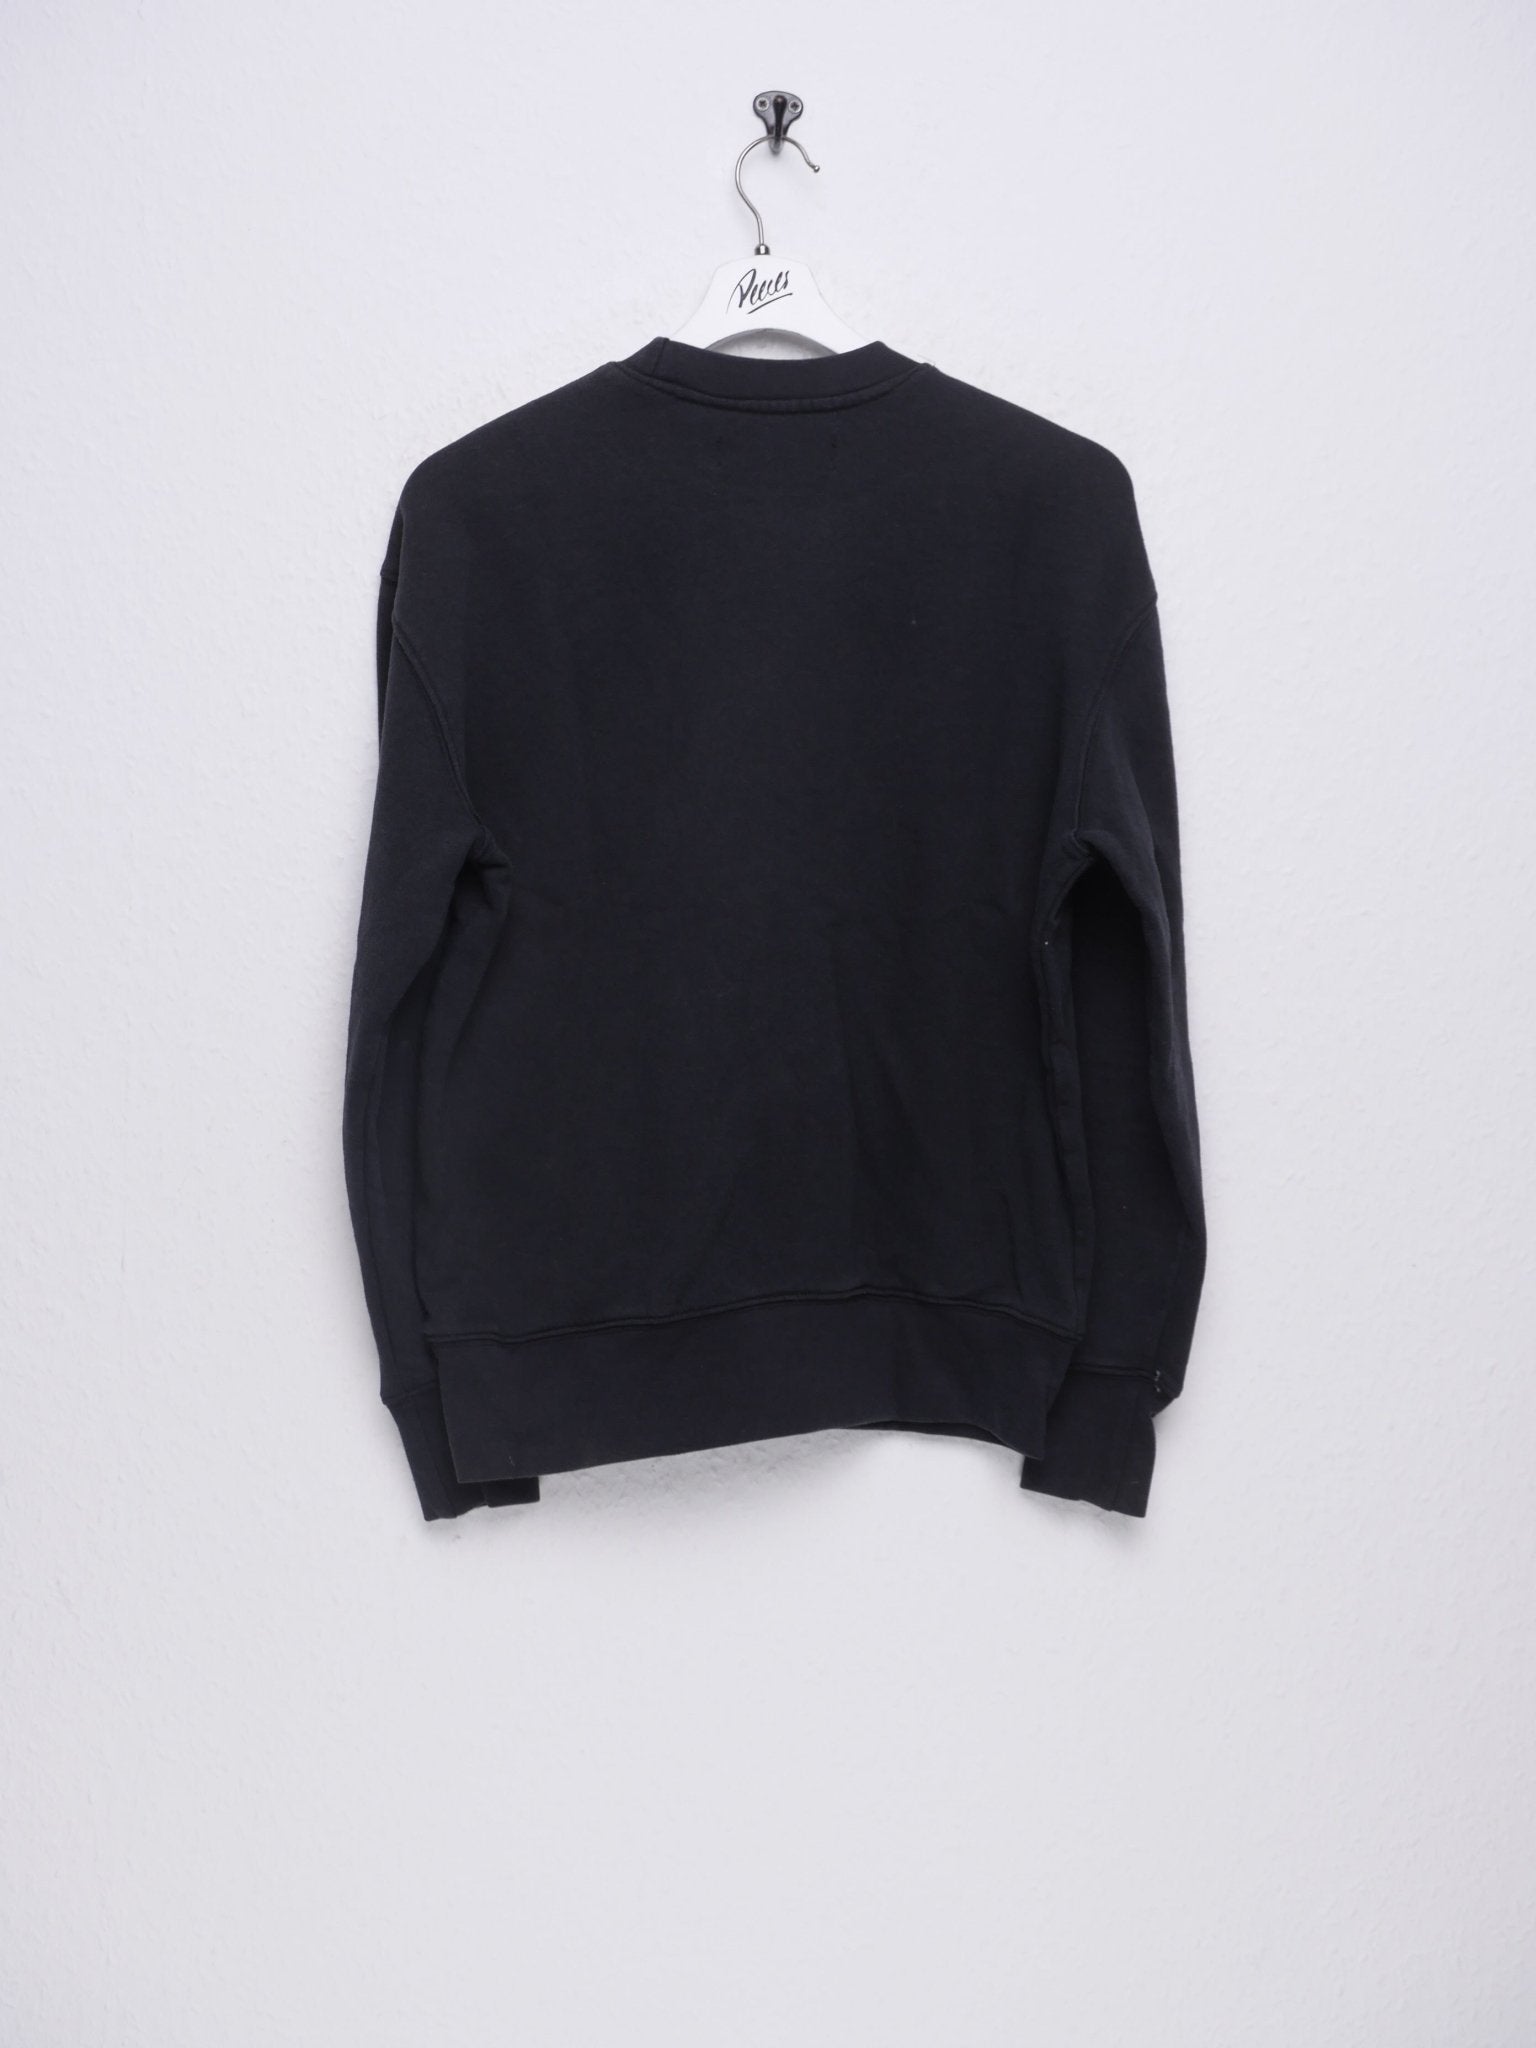 printed Rajvel Group black Sweater - Peeces